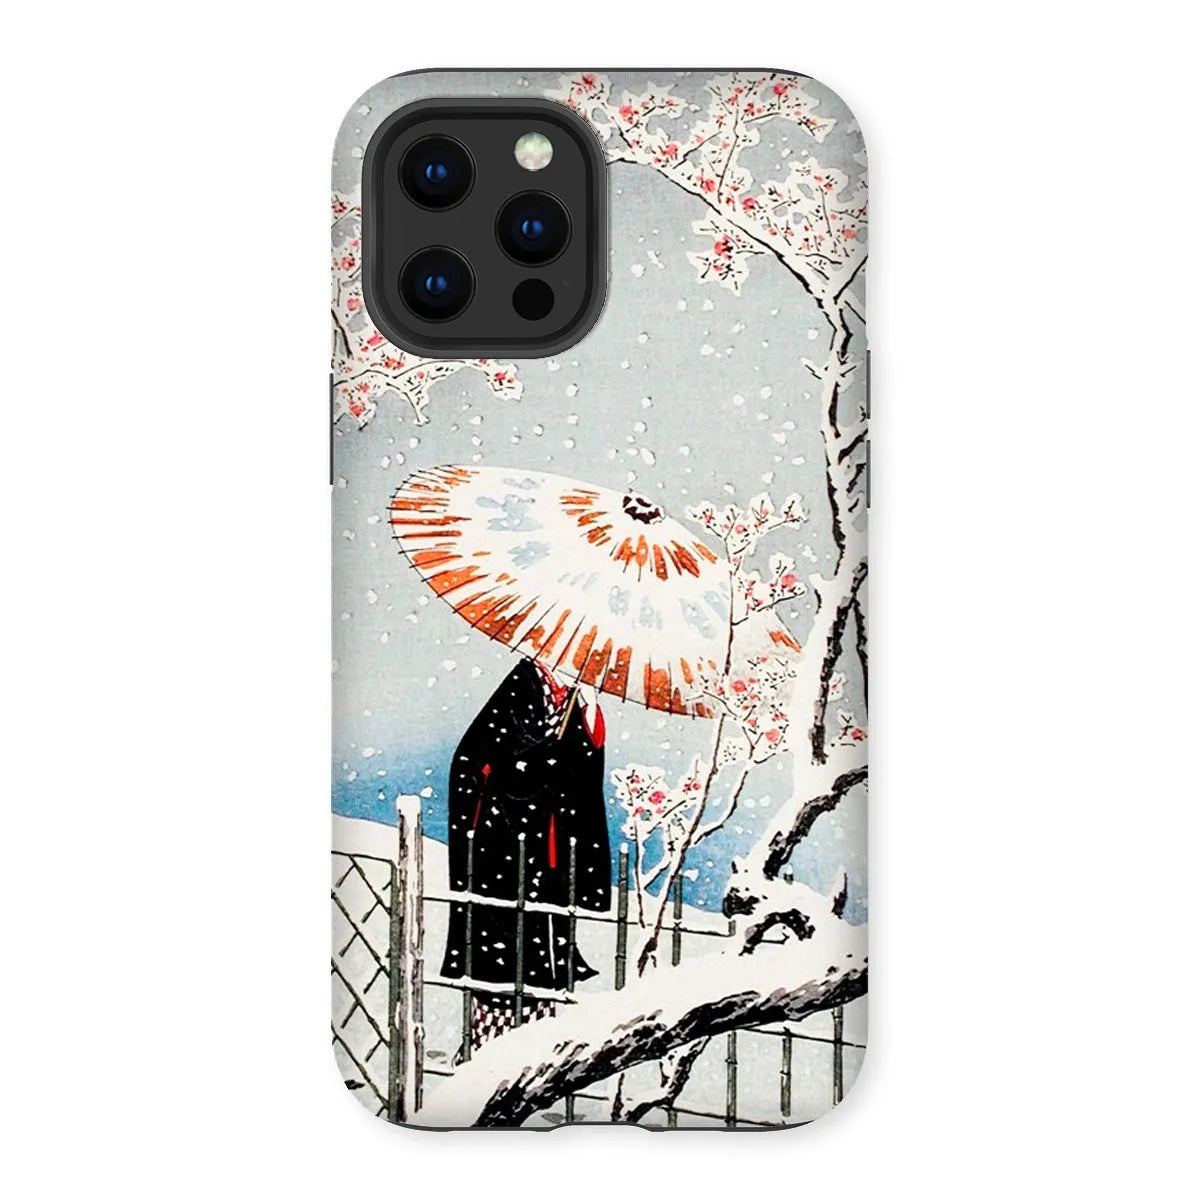 Plum Tree In Snow - Shin-hanga Phone Case - Hiroaki Takahashi - Iphone 12 Pro Max / Matte - Mobile Phone Cases